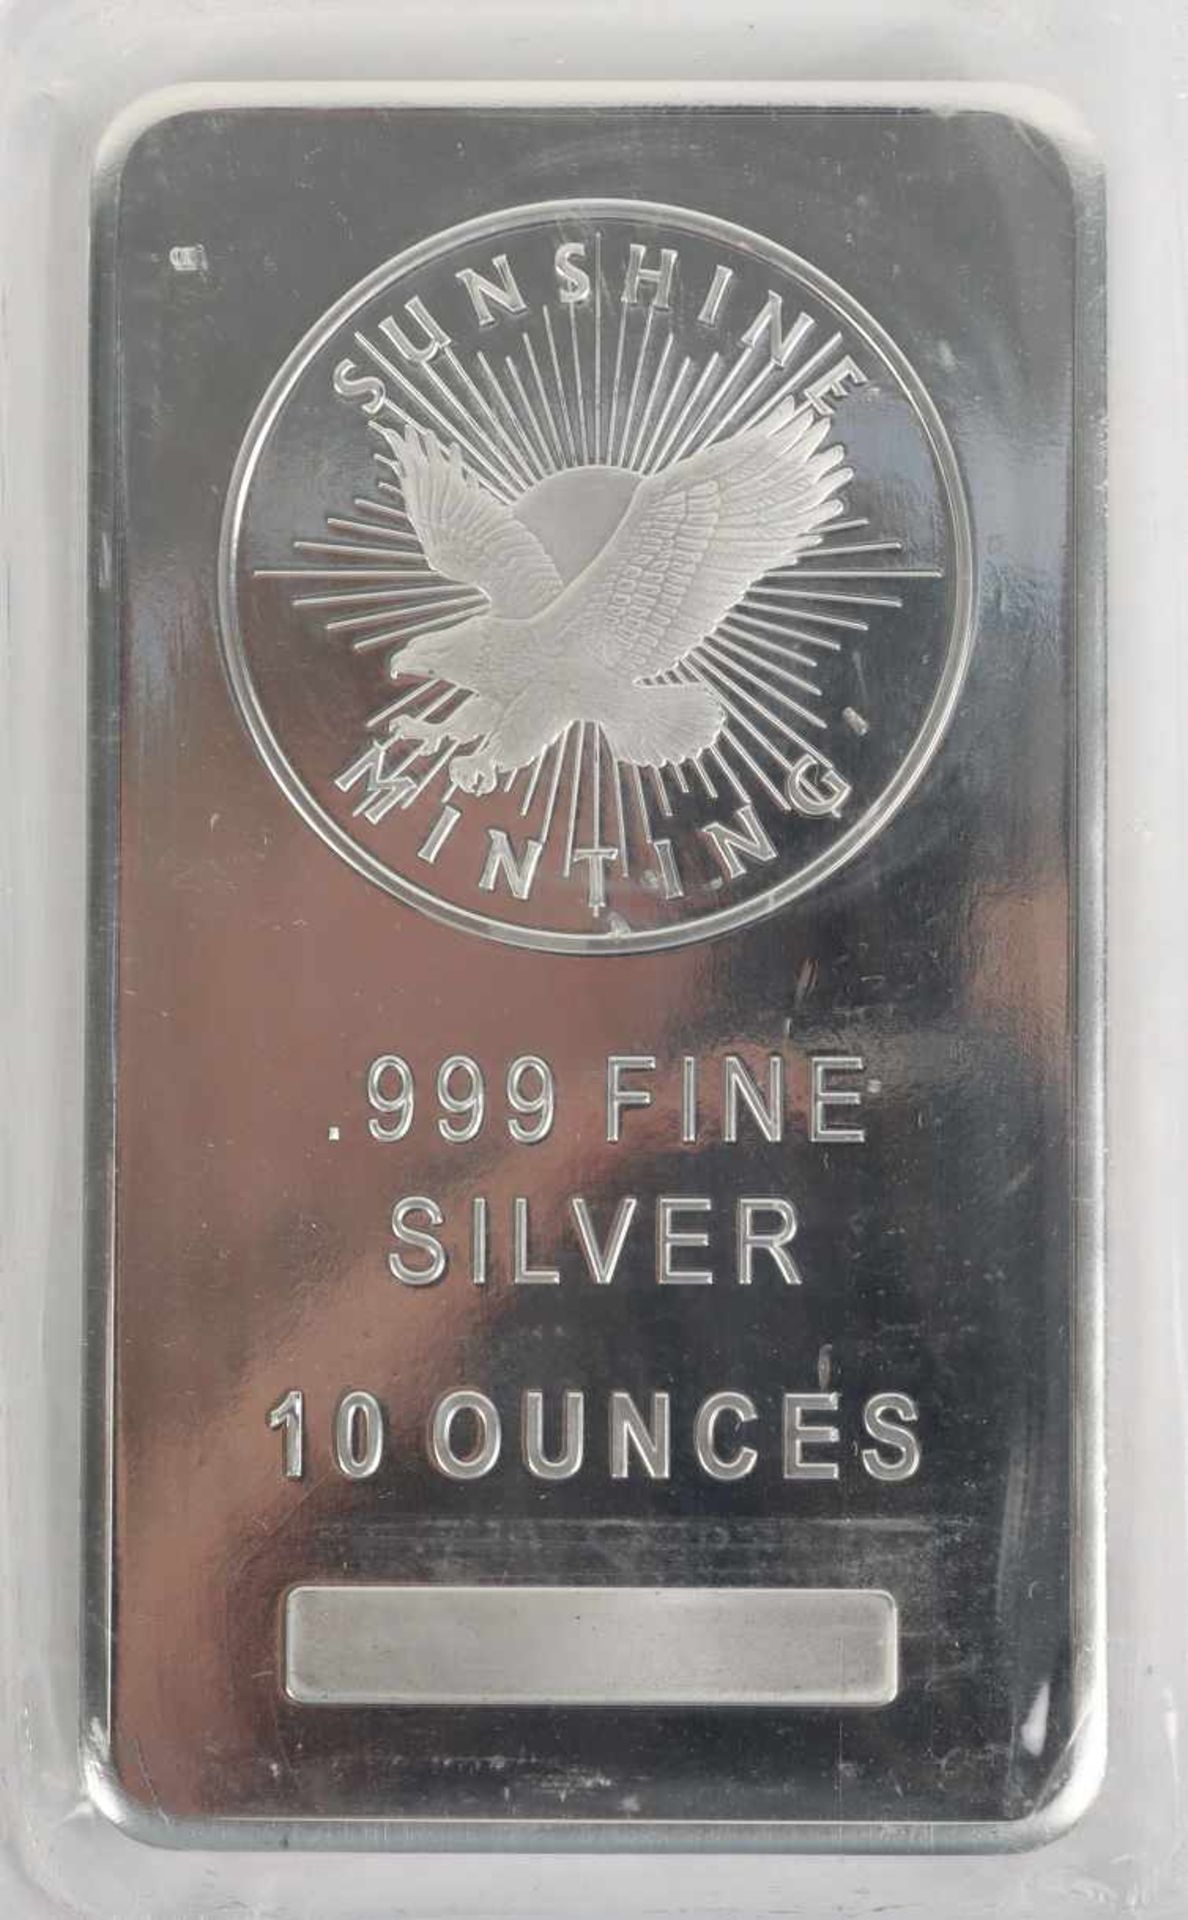 Sunshine Mining .999 Fine Silver 10 Ounces bar